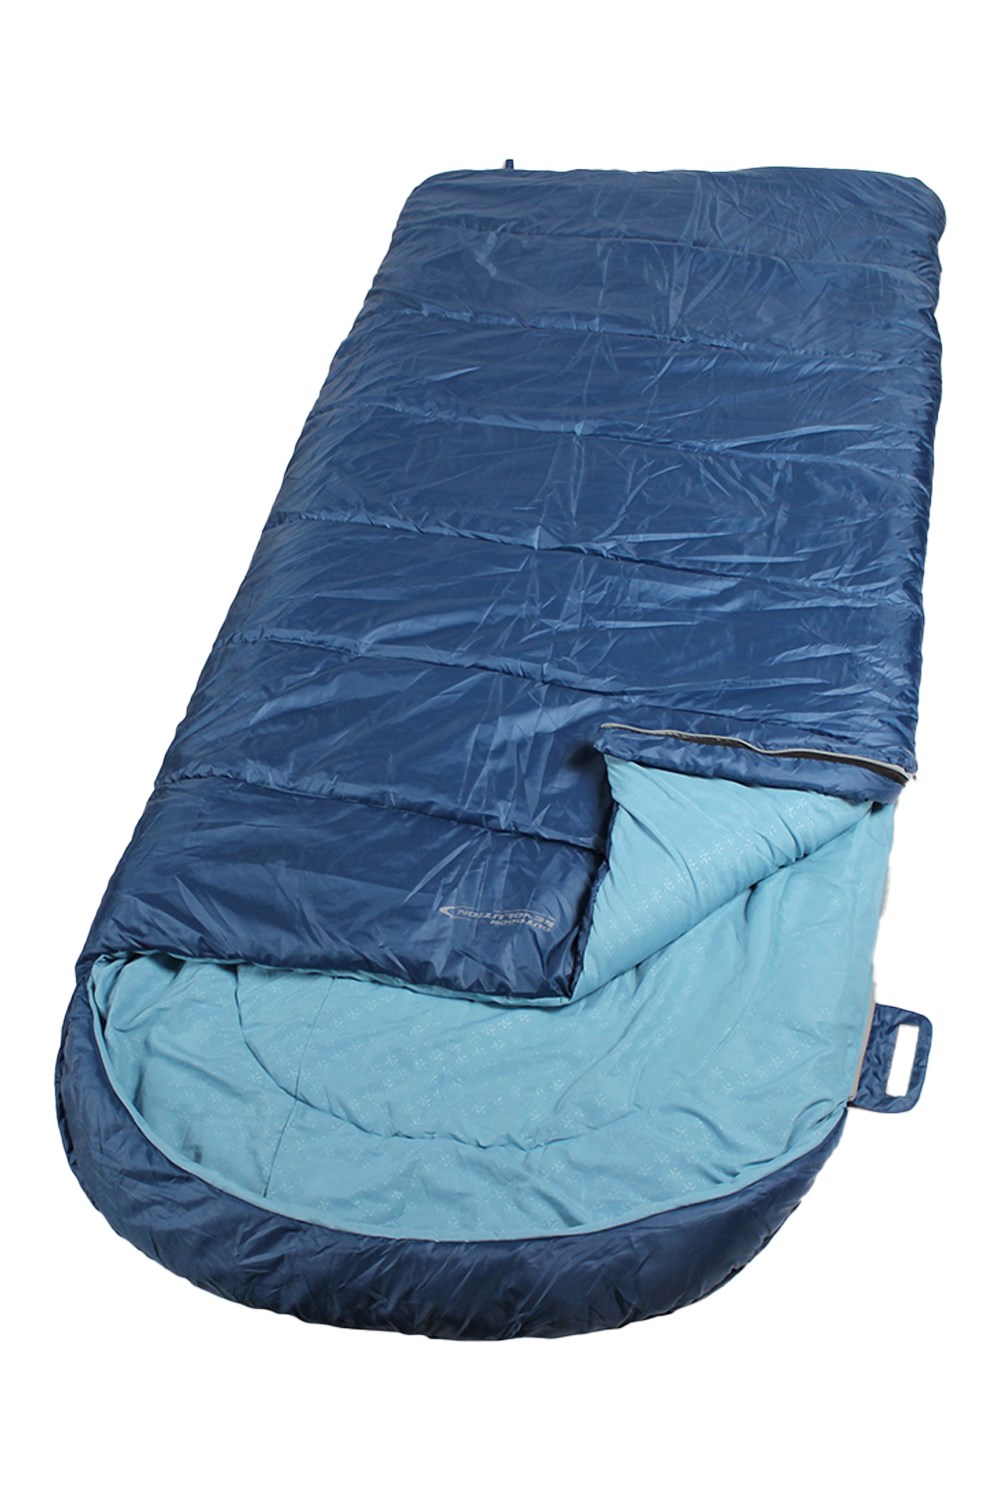 Campstar Midi 400 DL Sleeping Bag -